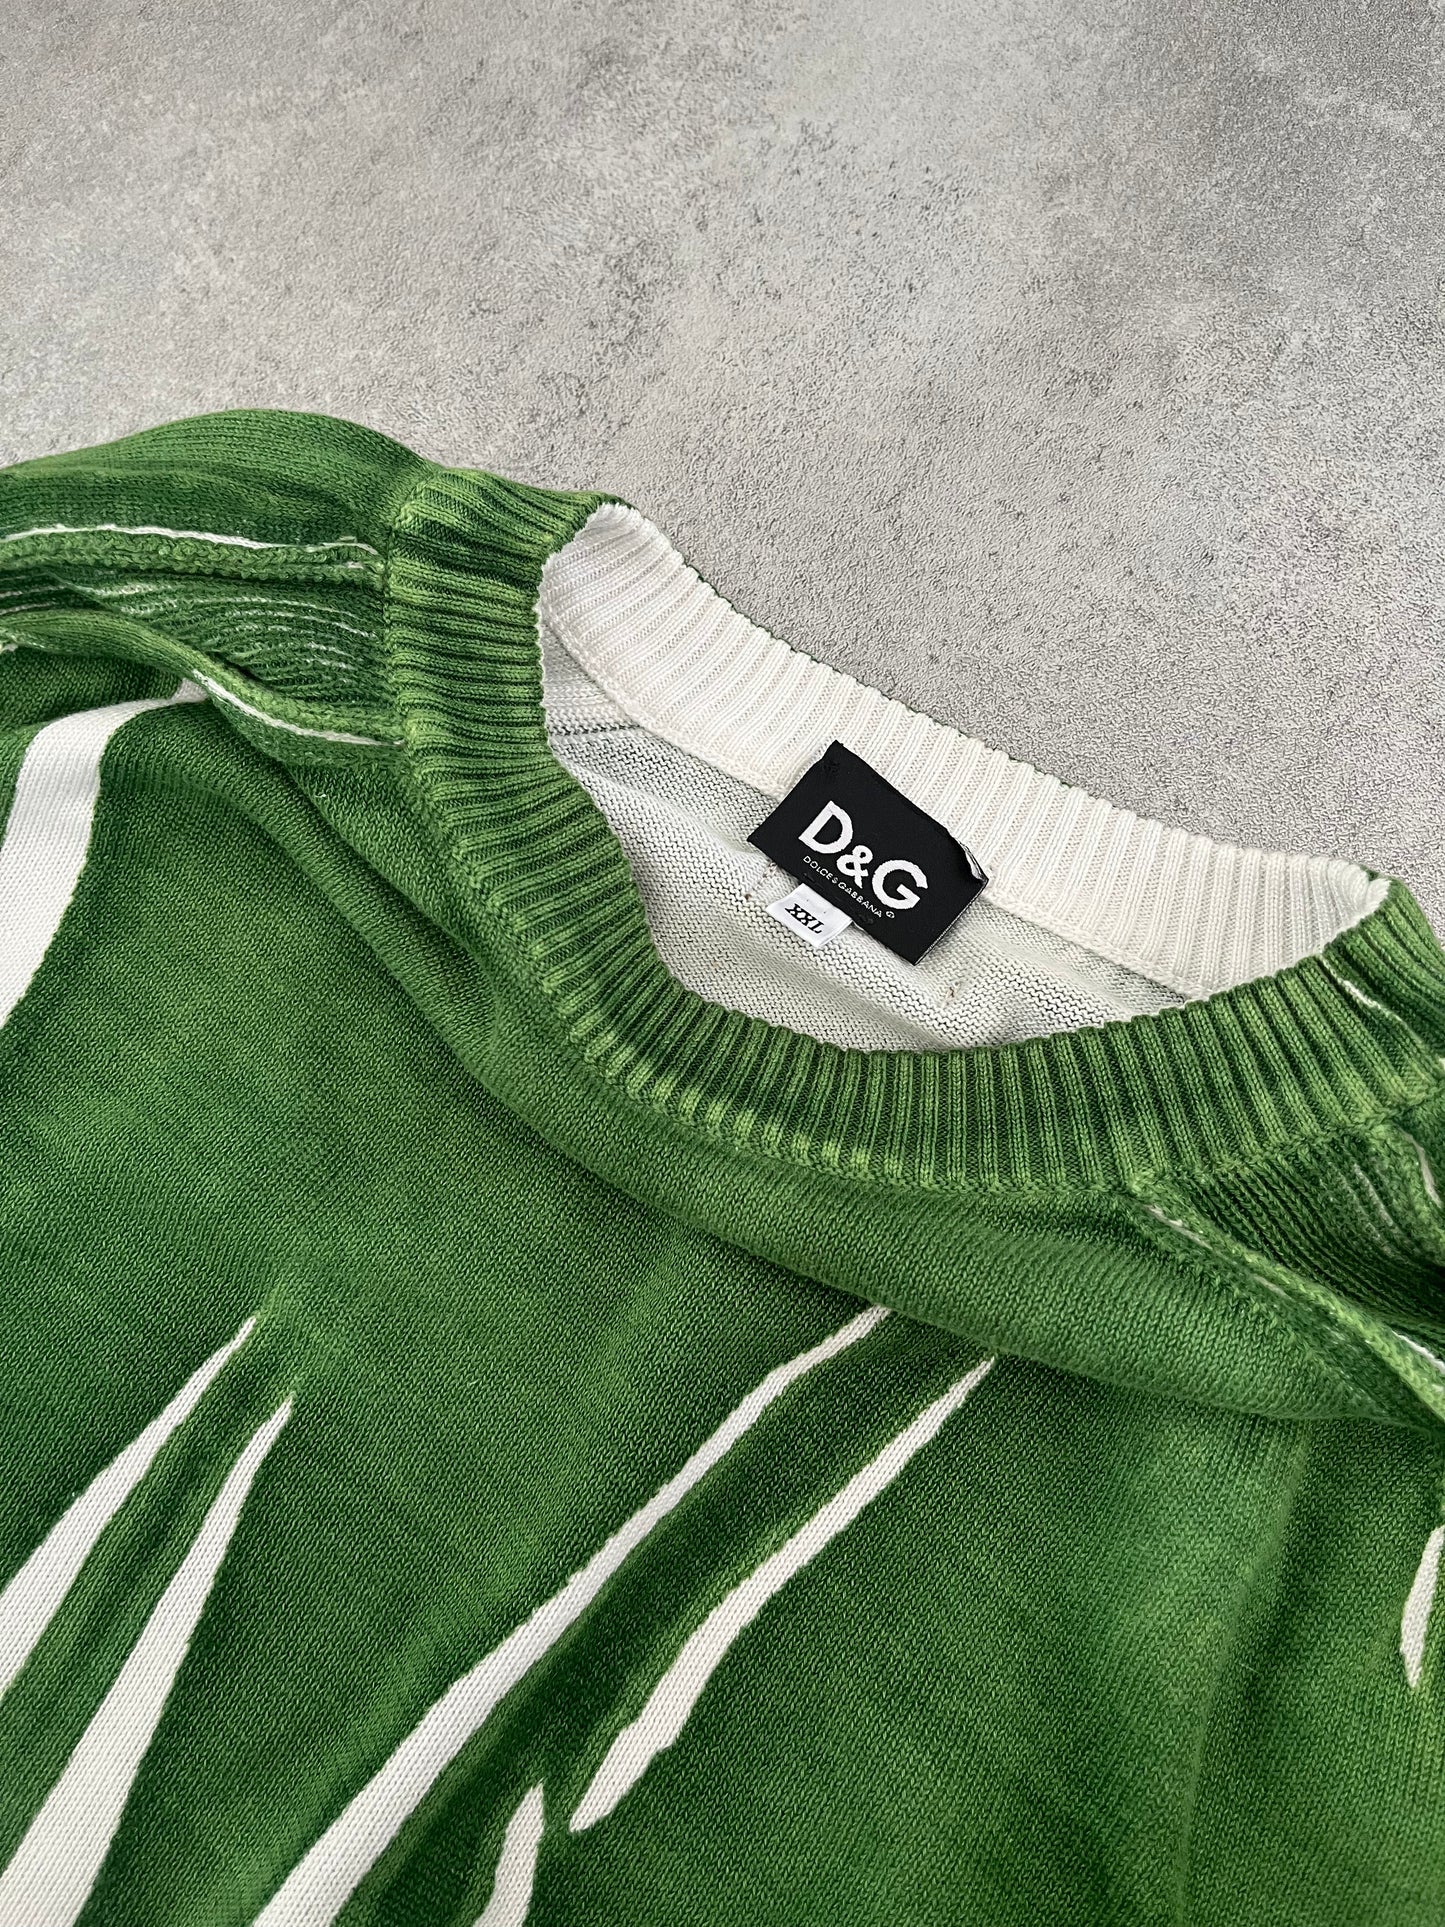 SS2006 Dolce & Gabbana Green Canvas Sweater (L) - 6